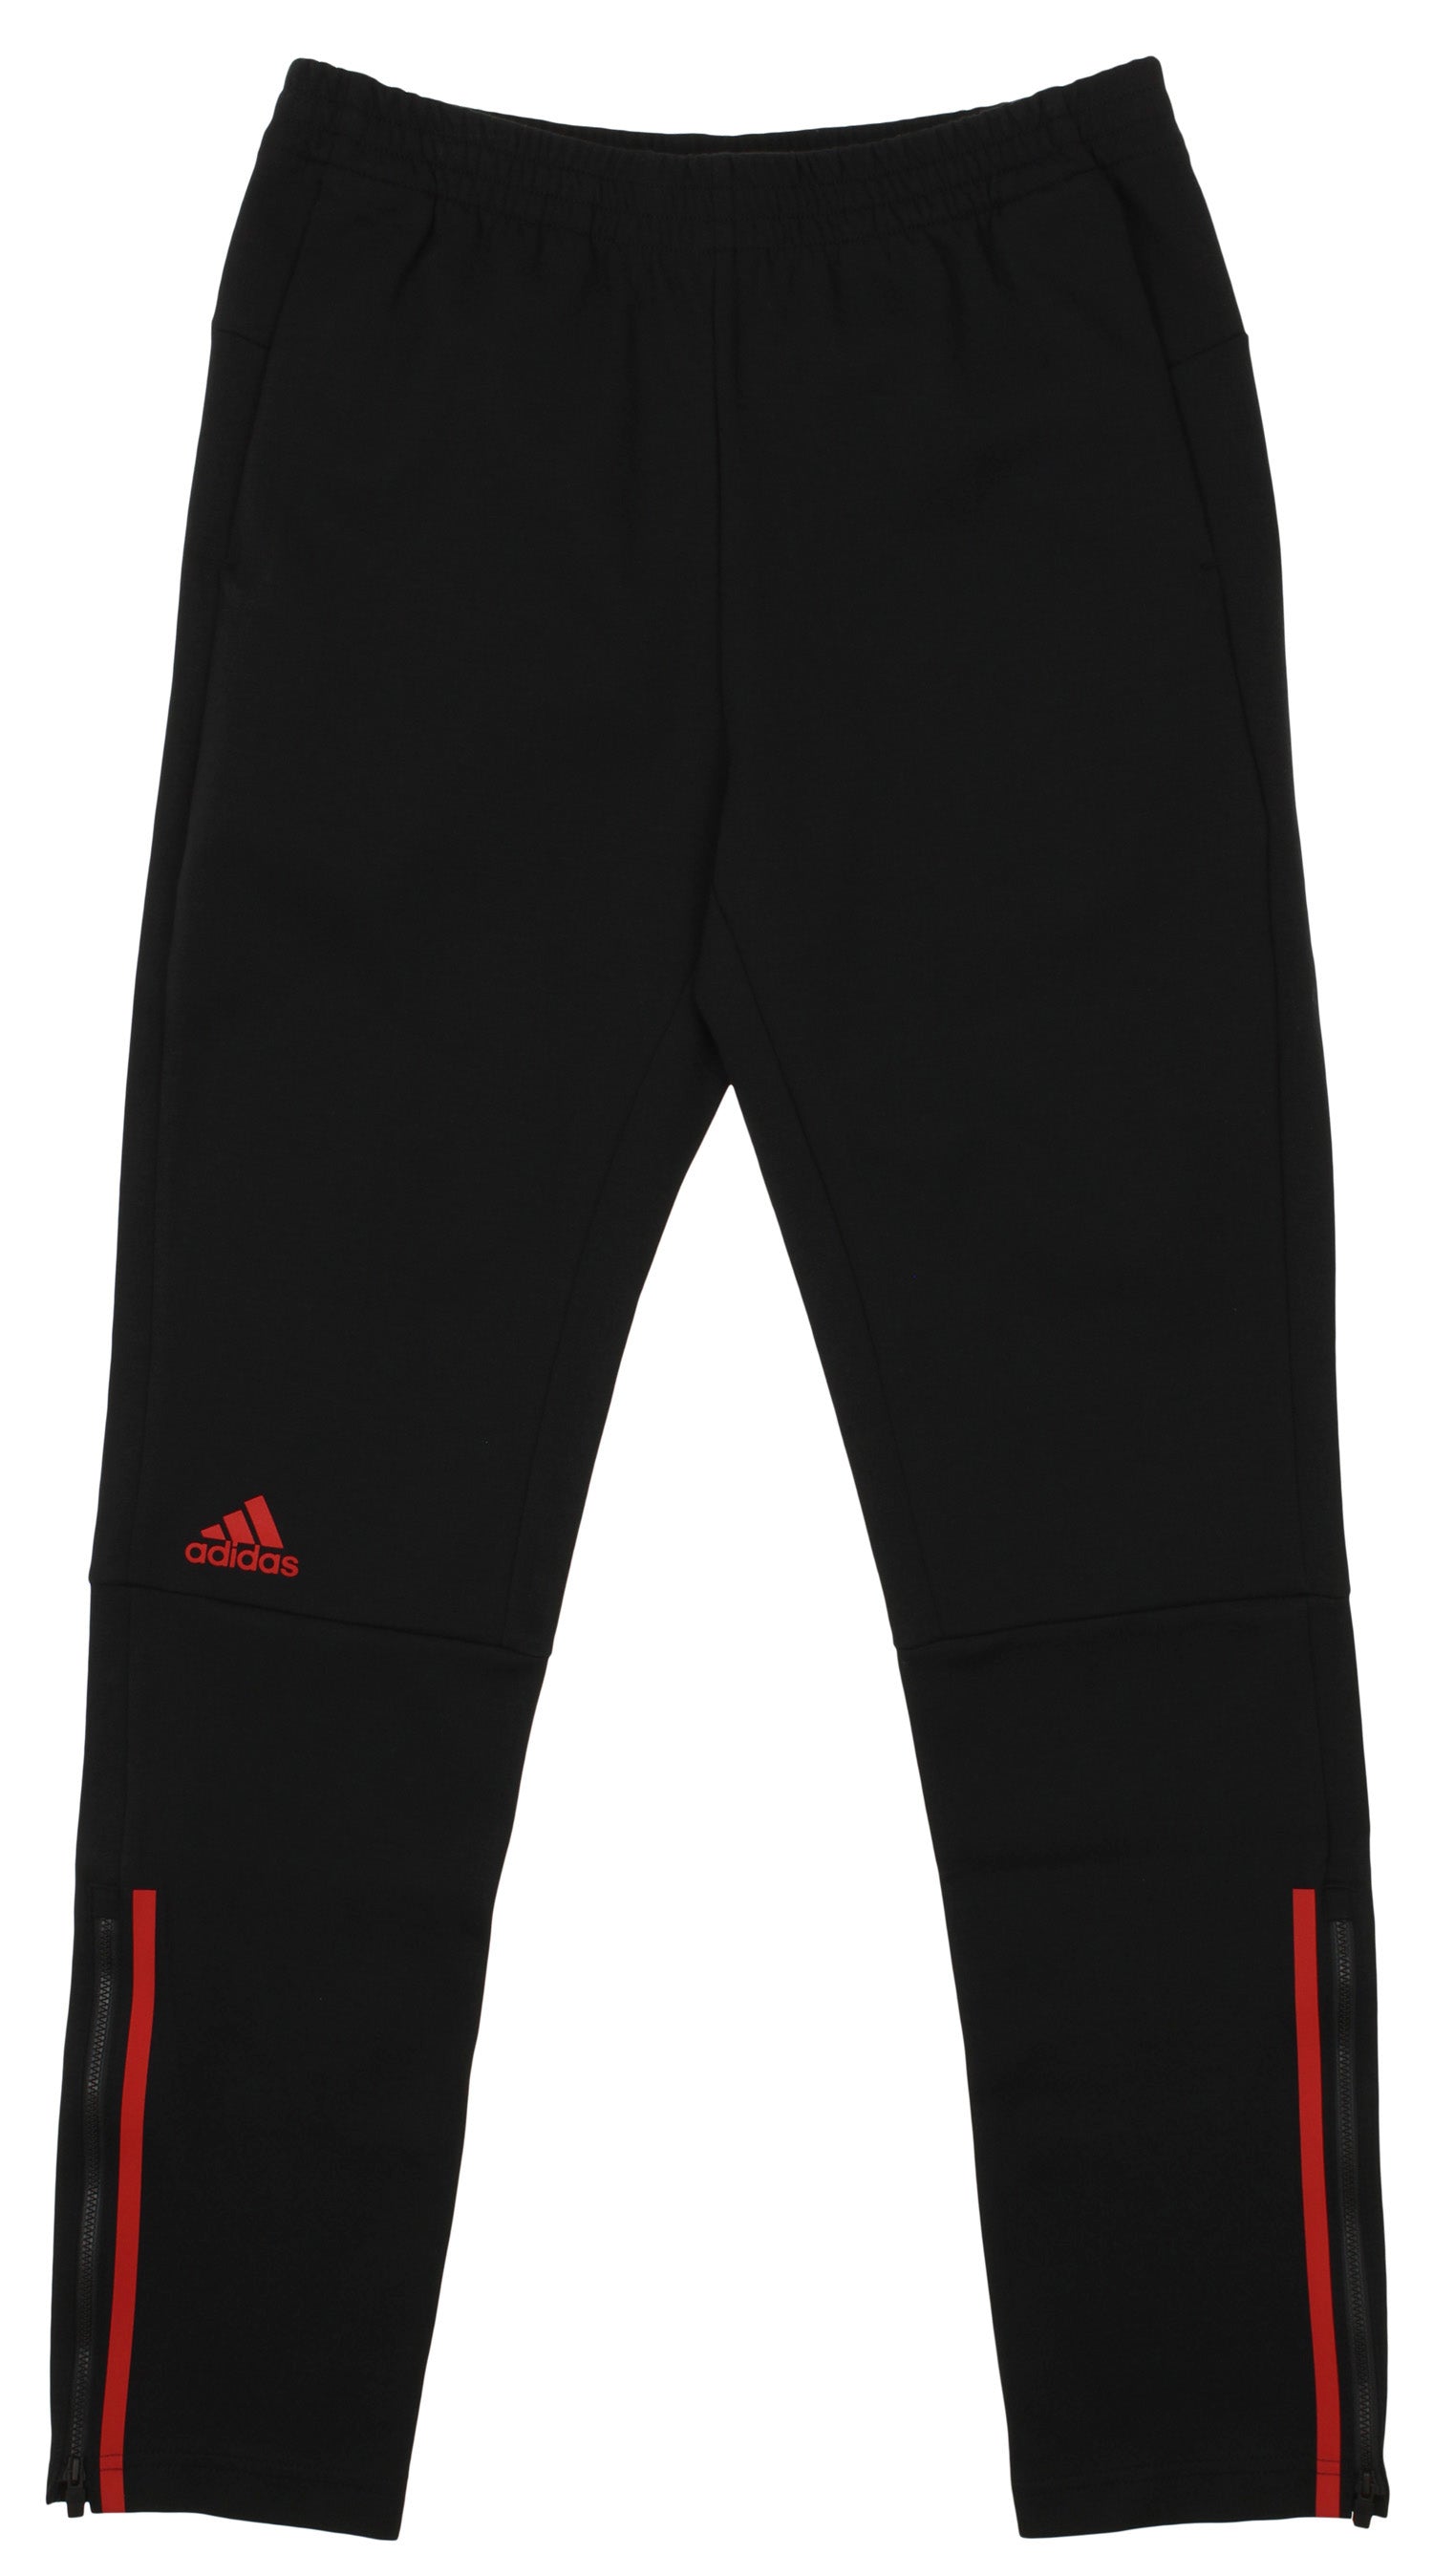 Black Red Men Track Pants Adidas - Buy Black Red Men Track Pants Adidas  online in India